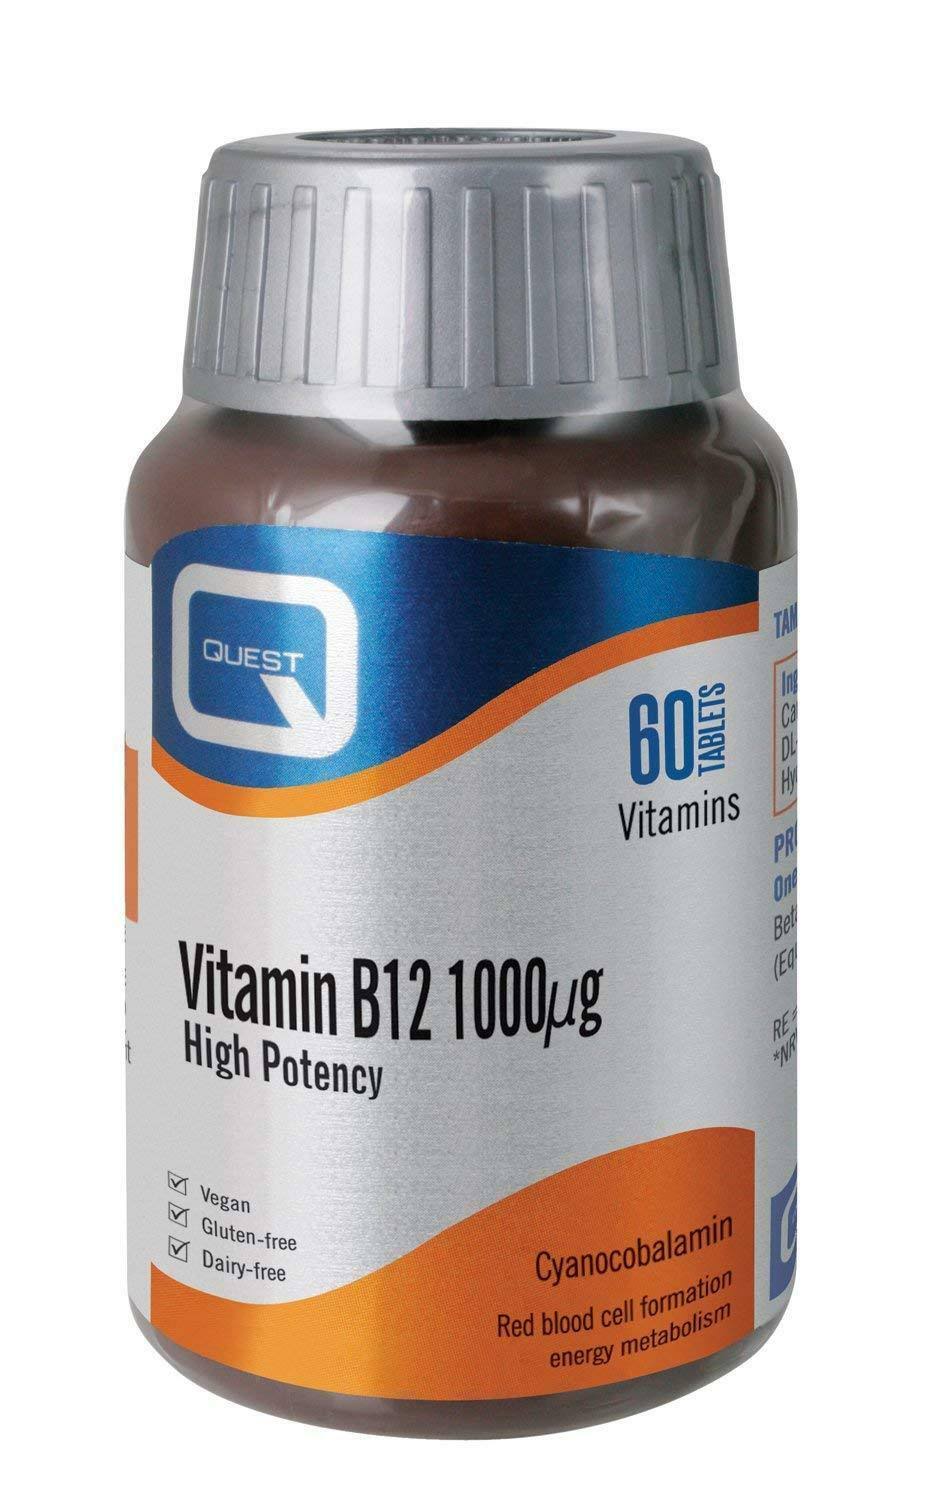 Quest B12 1000ug High Potency Vitamins - 60 Tablets